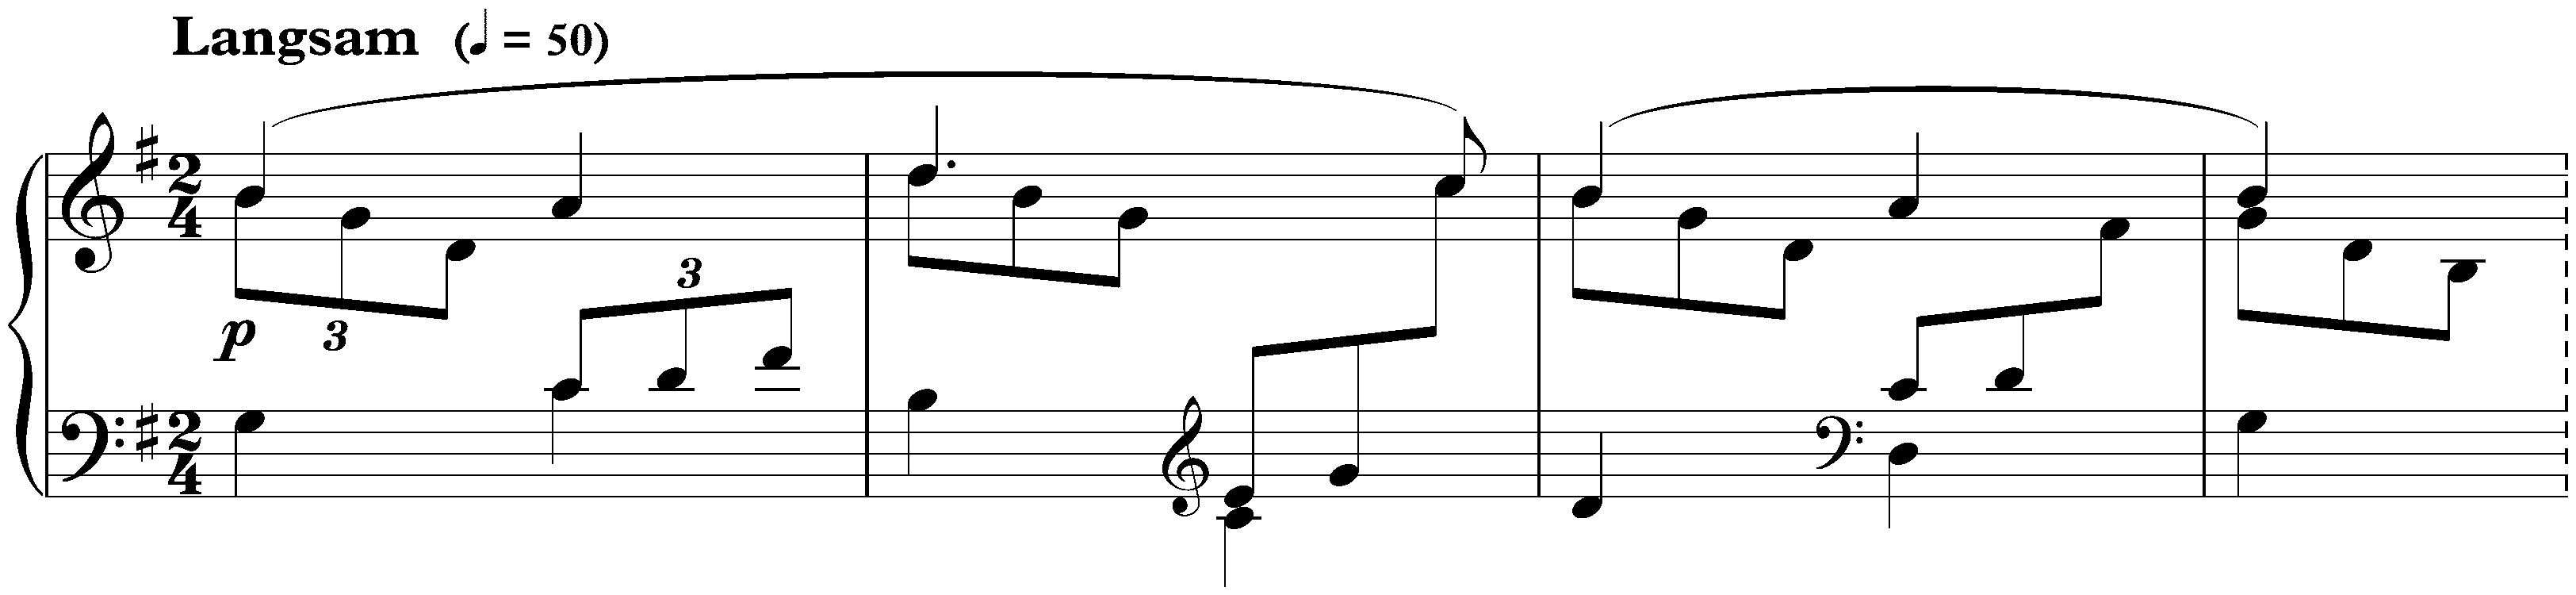 Sonate für die Jugend in D major, op. 118 no. 2; 3. Abendlied: Langsam